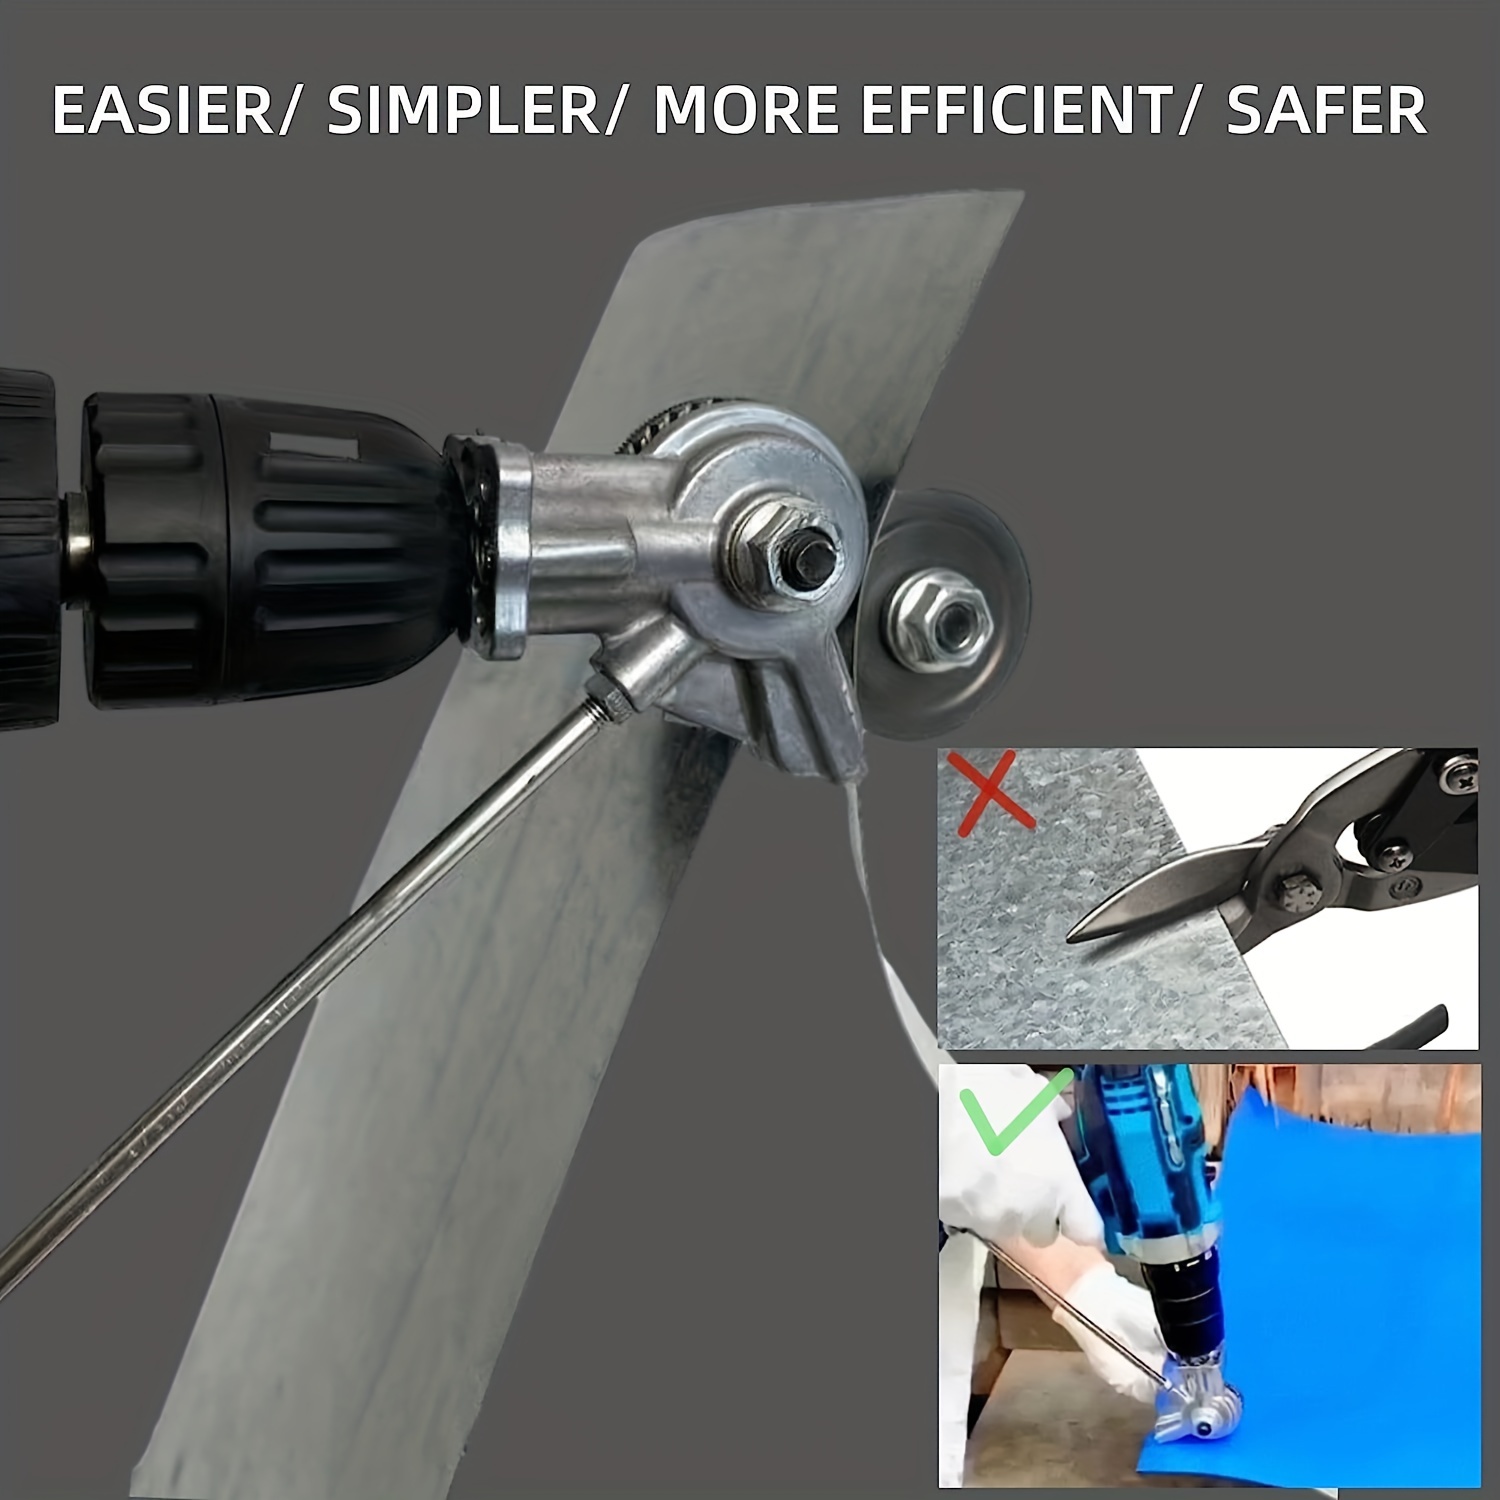 Electric Drill Refitting Plate Shears Sheet Cutter Metal - Temu